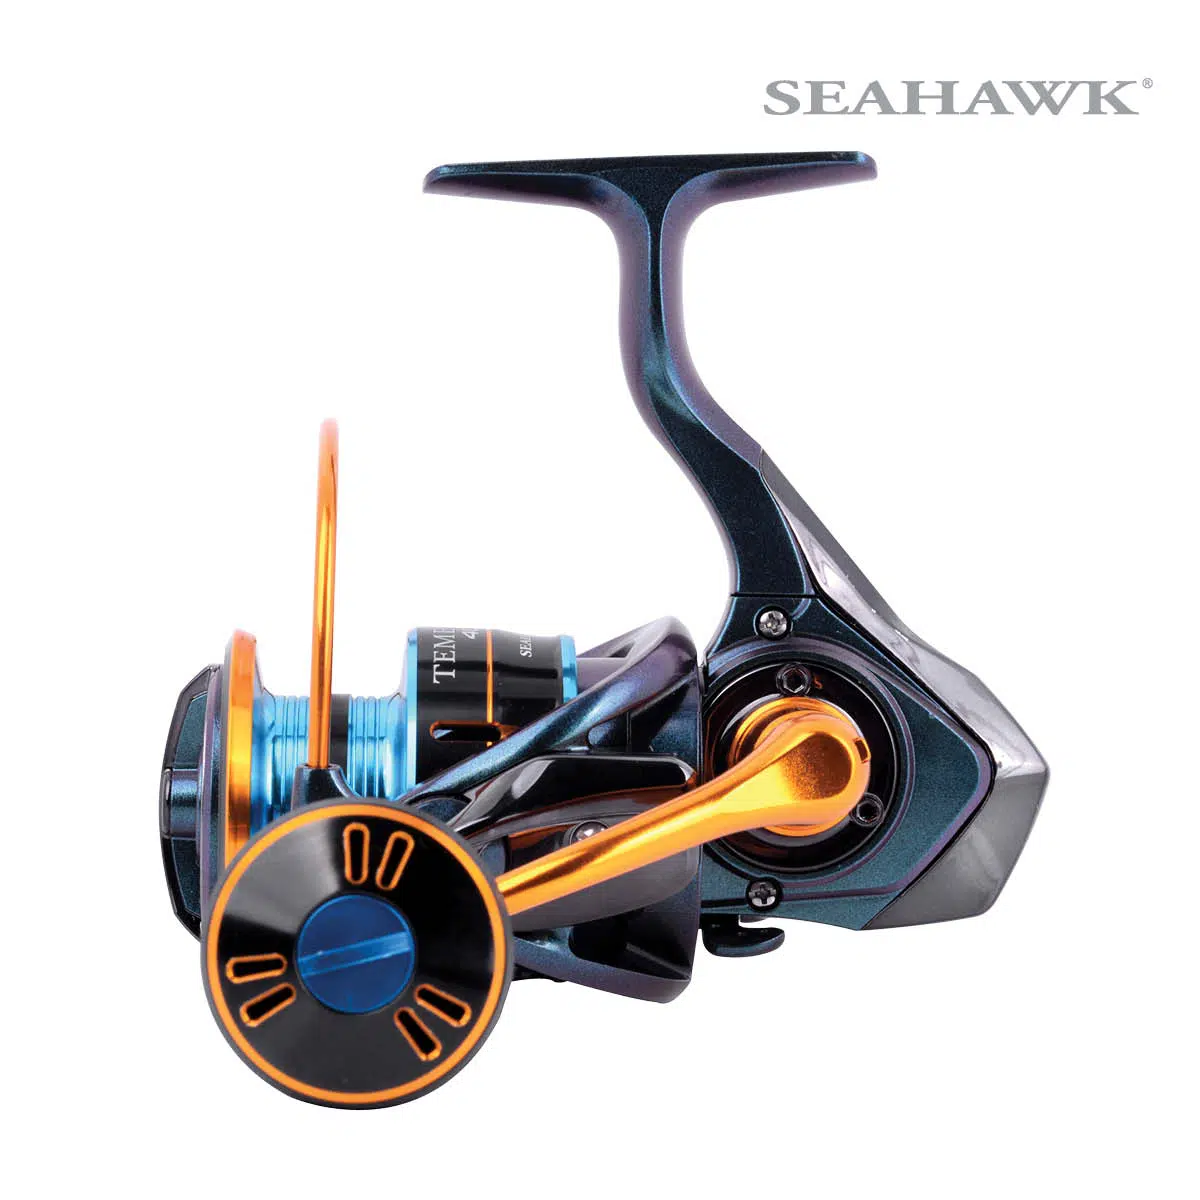 Seahawk Temesis FX  All Around Spinning Reel